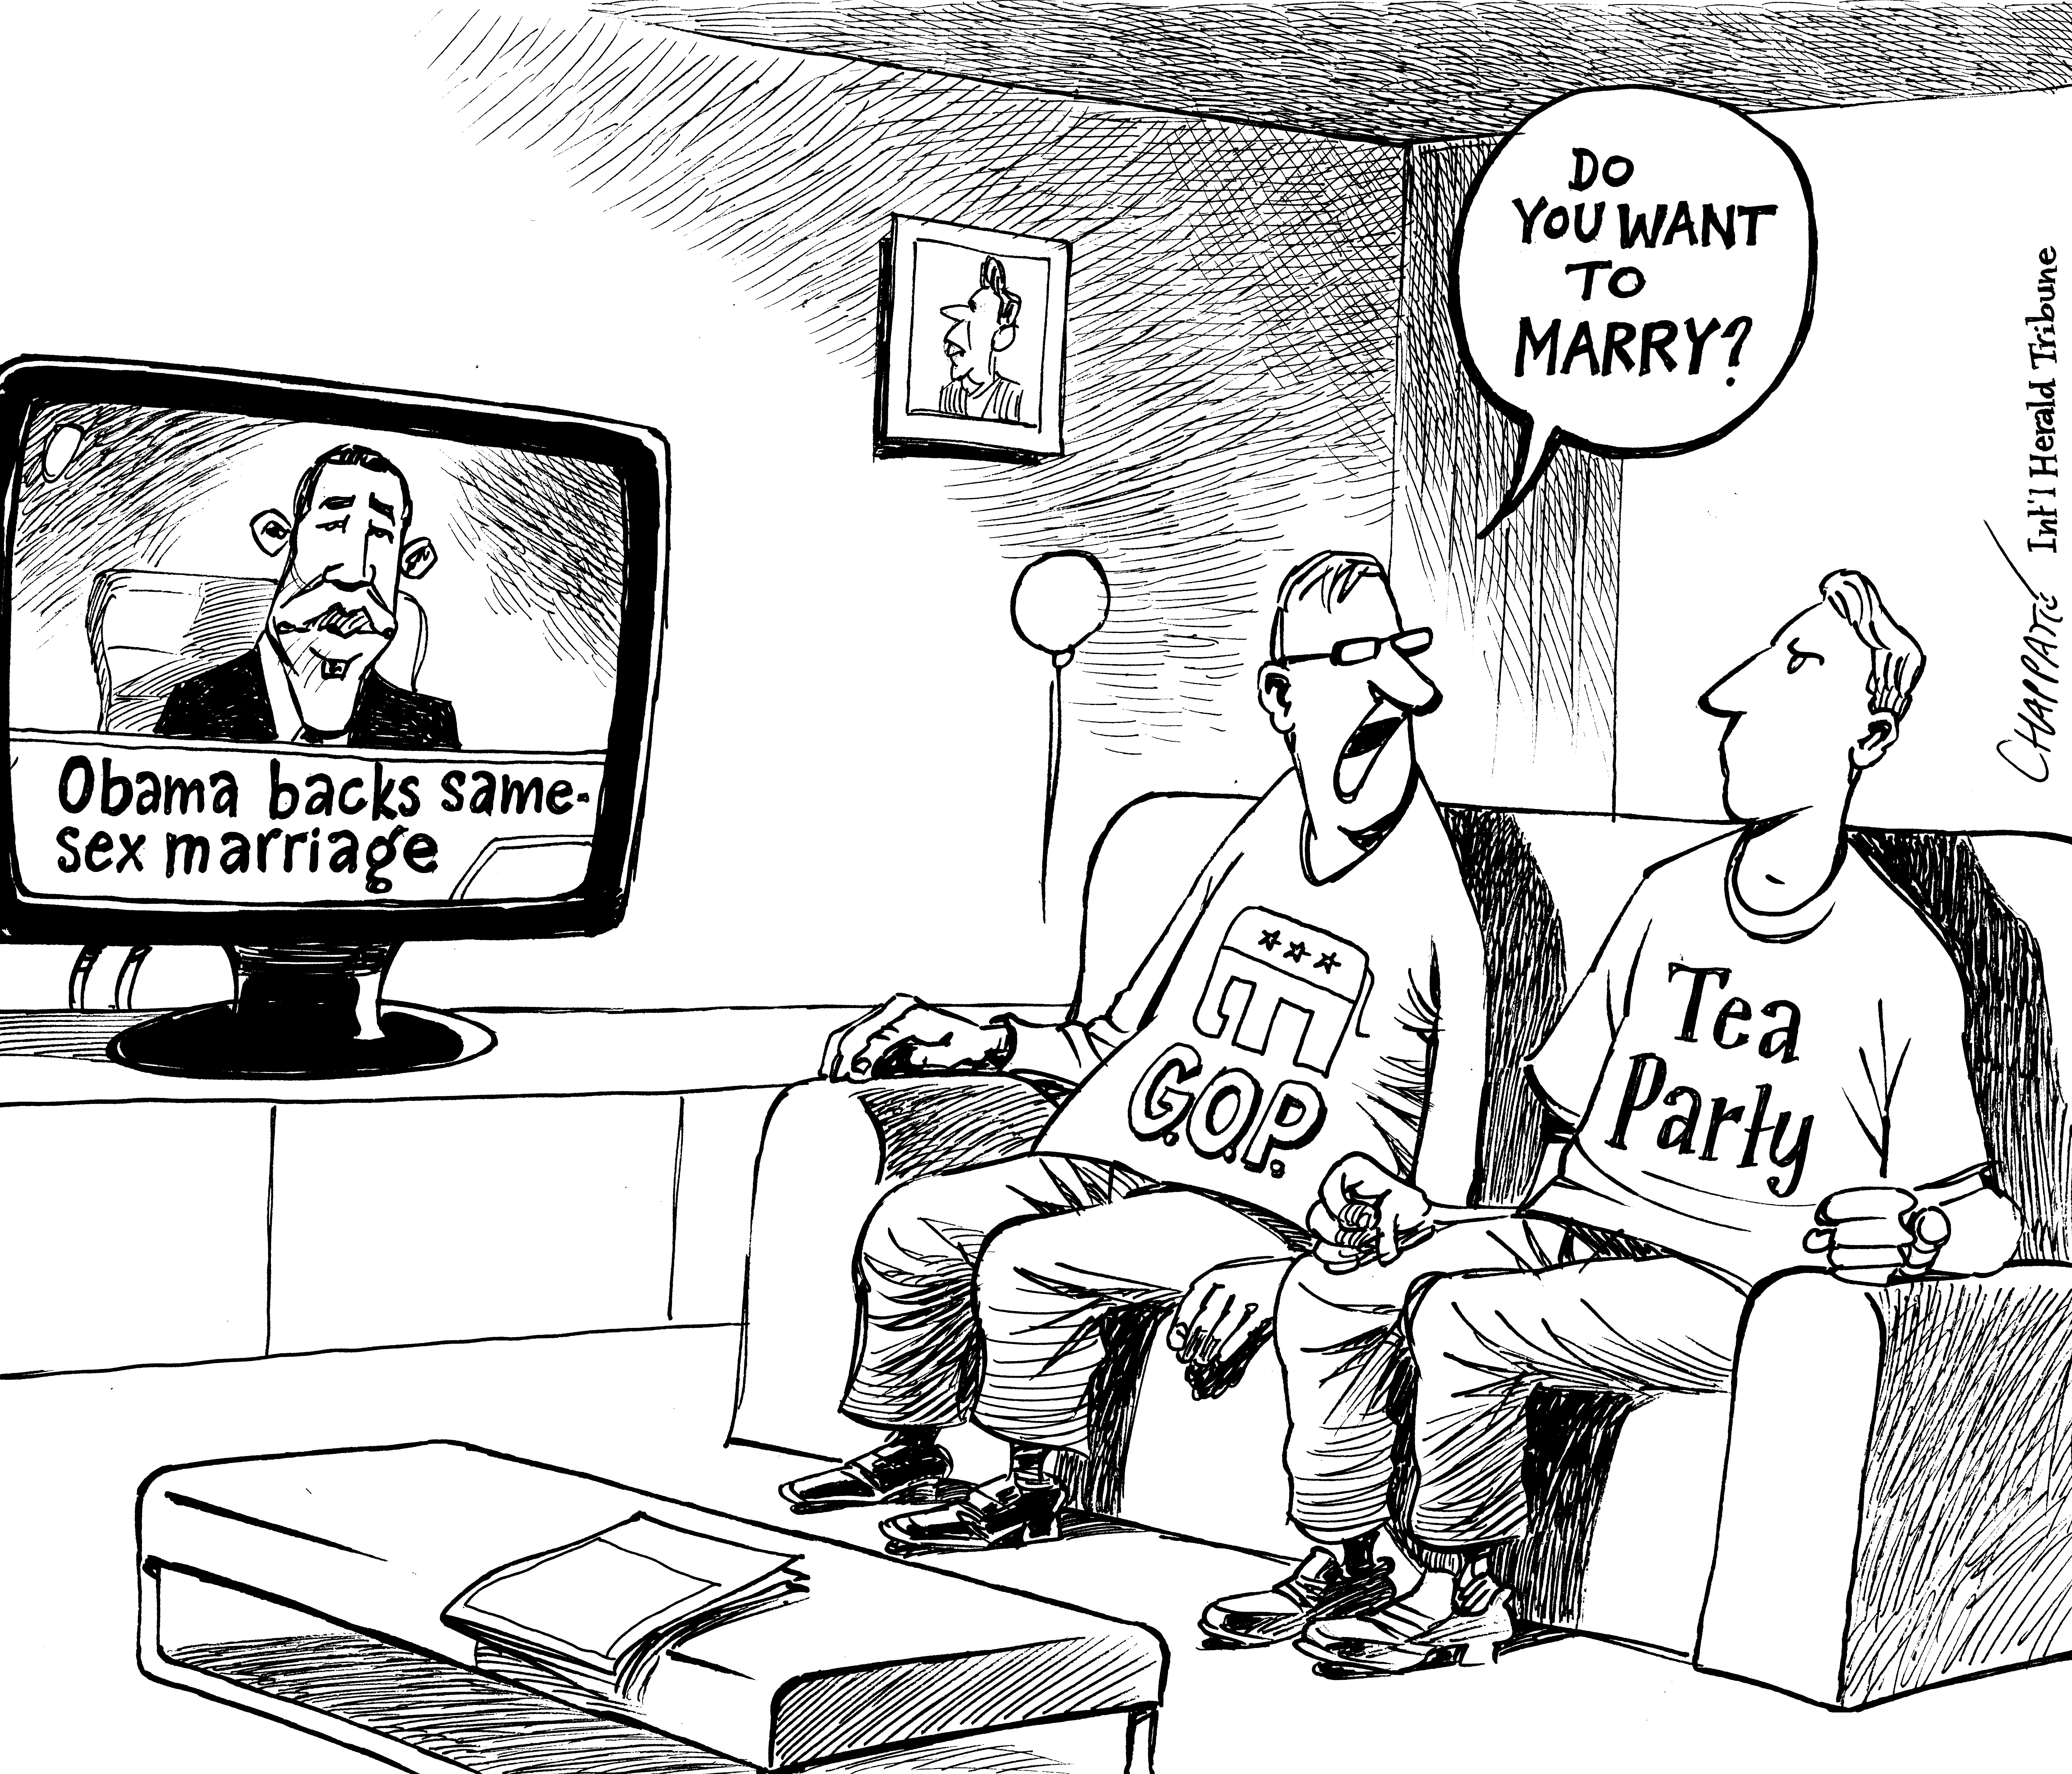 Obama Backs Same-Sex Marriage